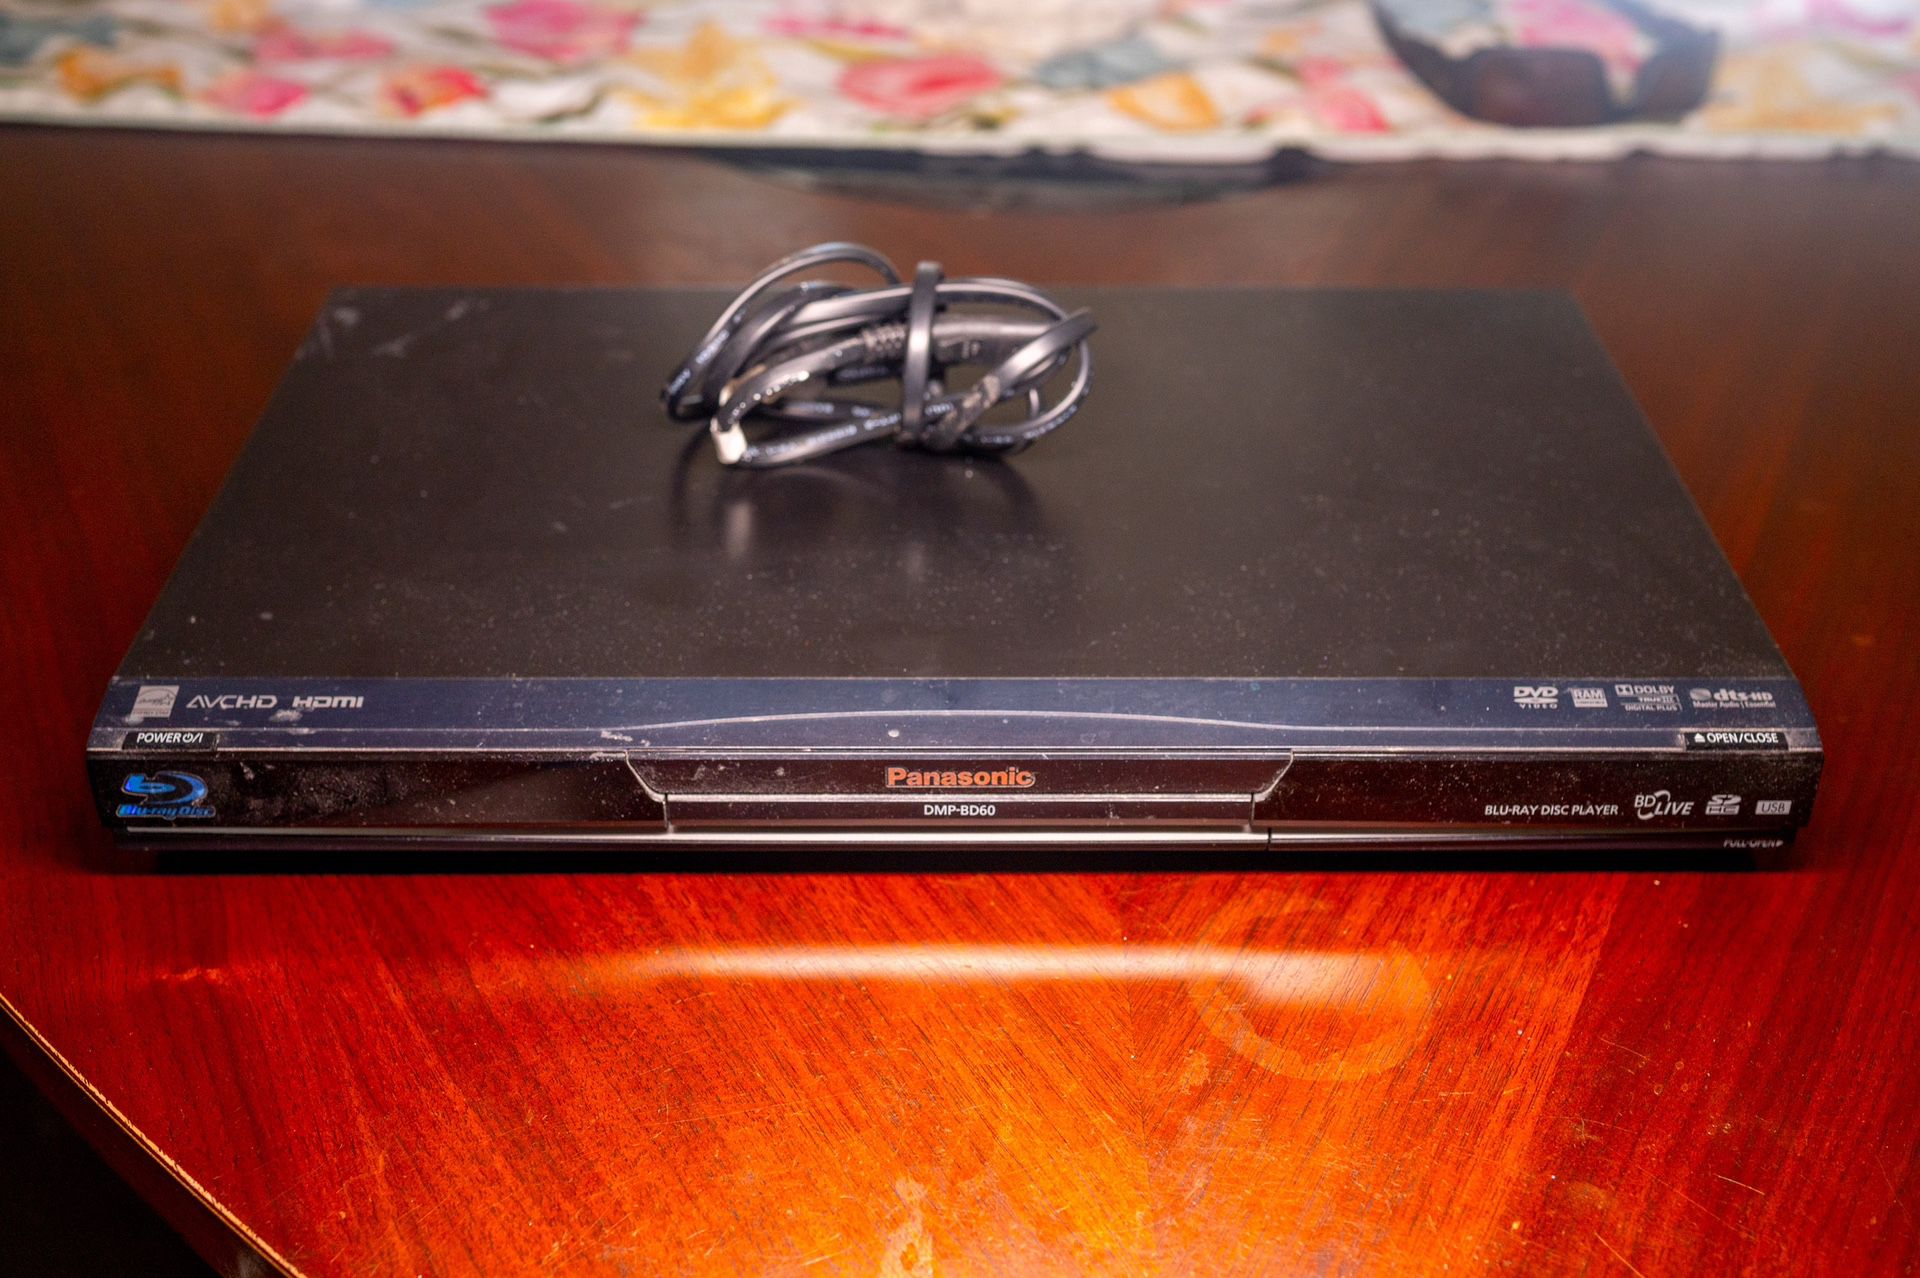 Panasonic DMP-BD60 Blu-ray player